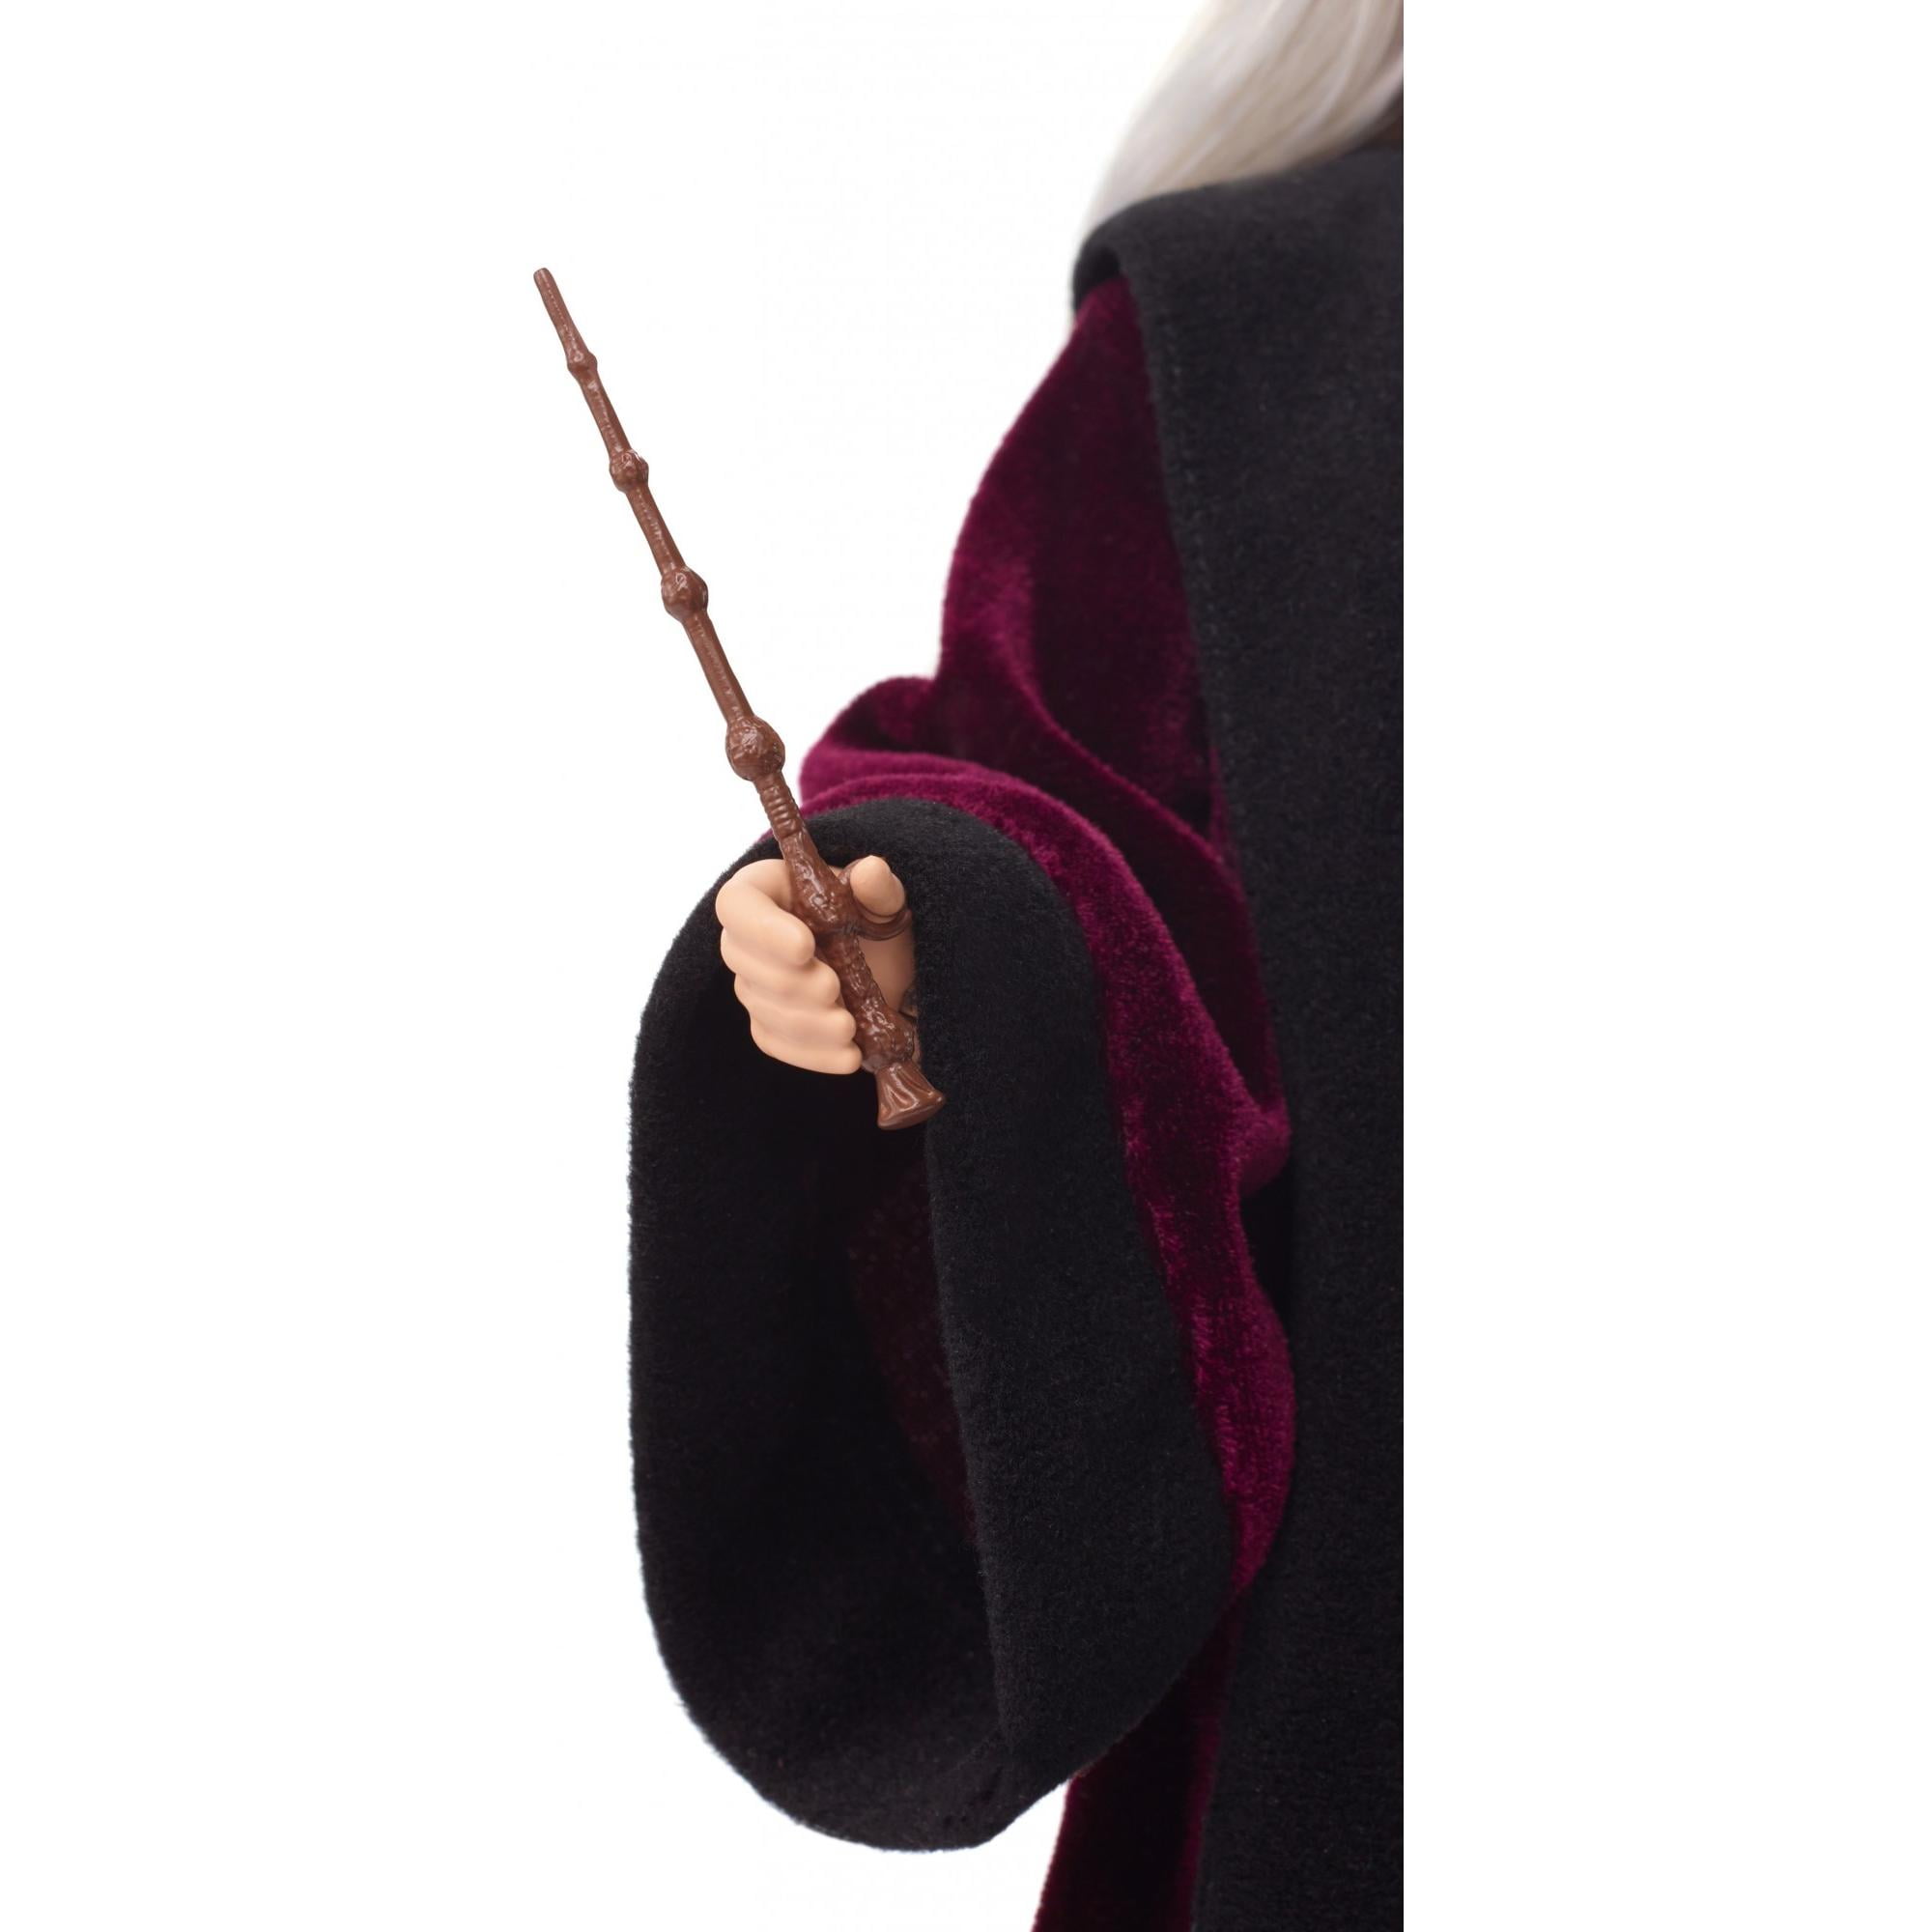 New dolls - Barbie Harry Potter Albus Dumbledore, Harry Po…